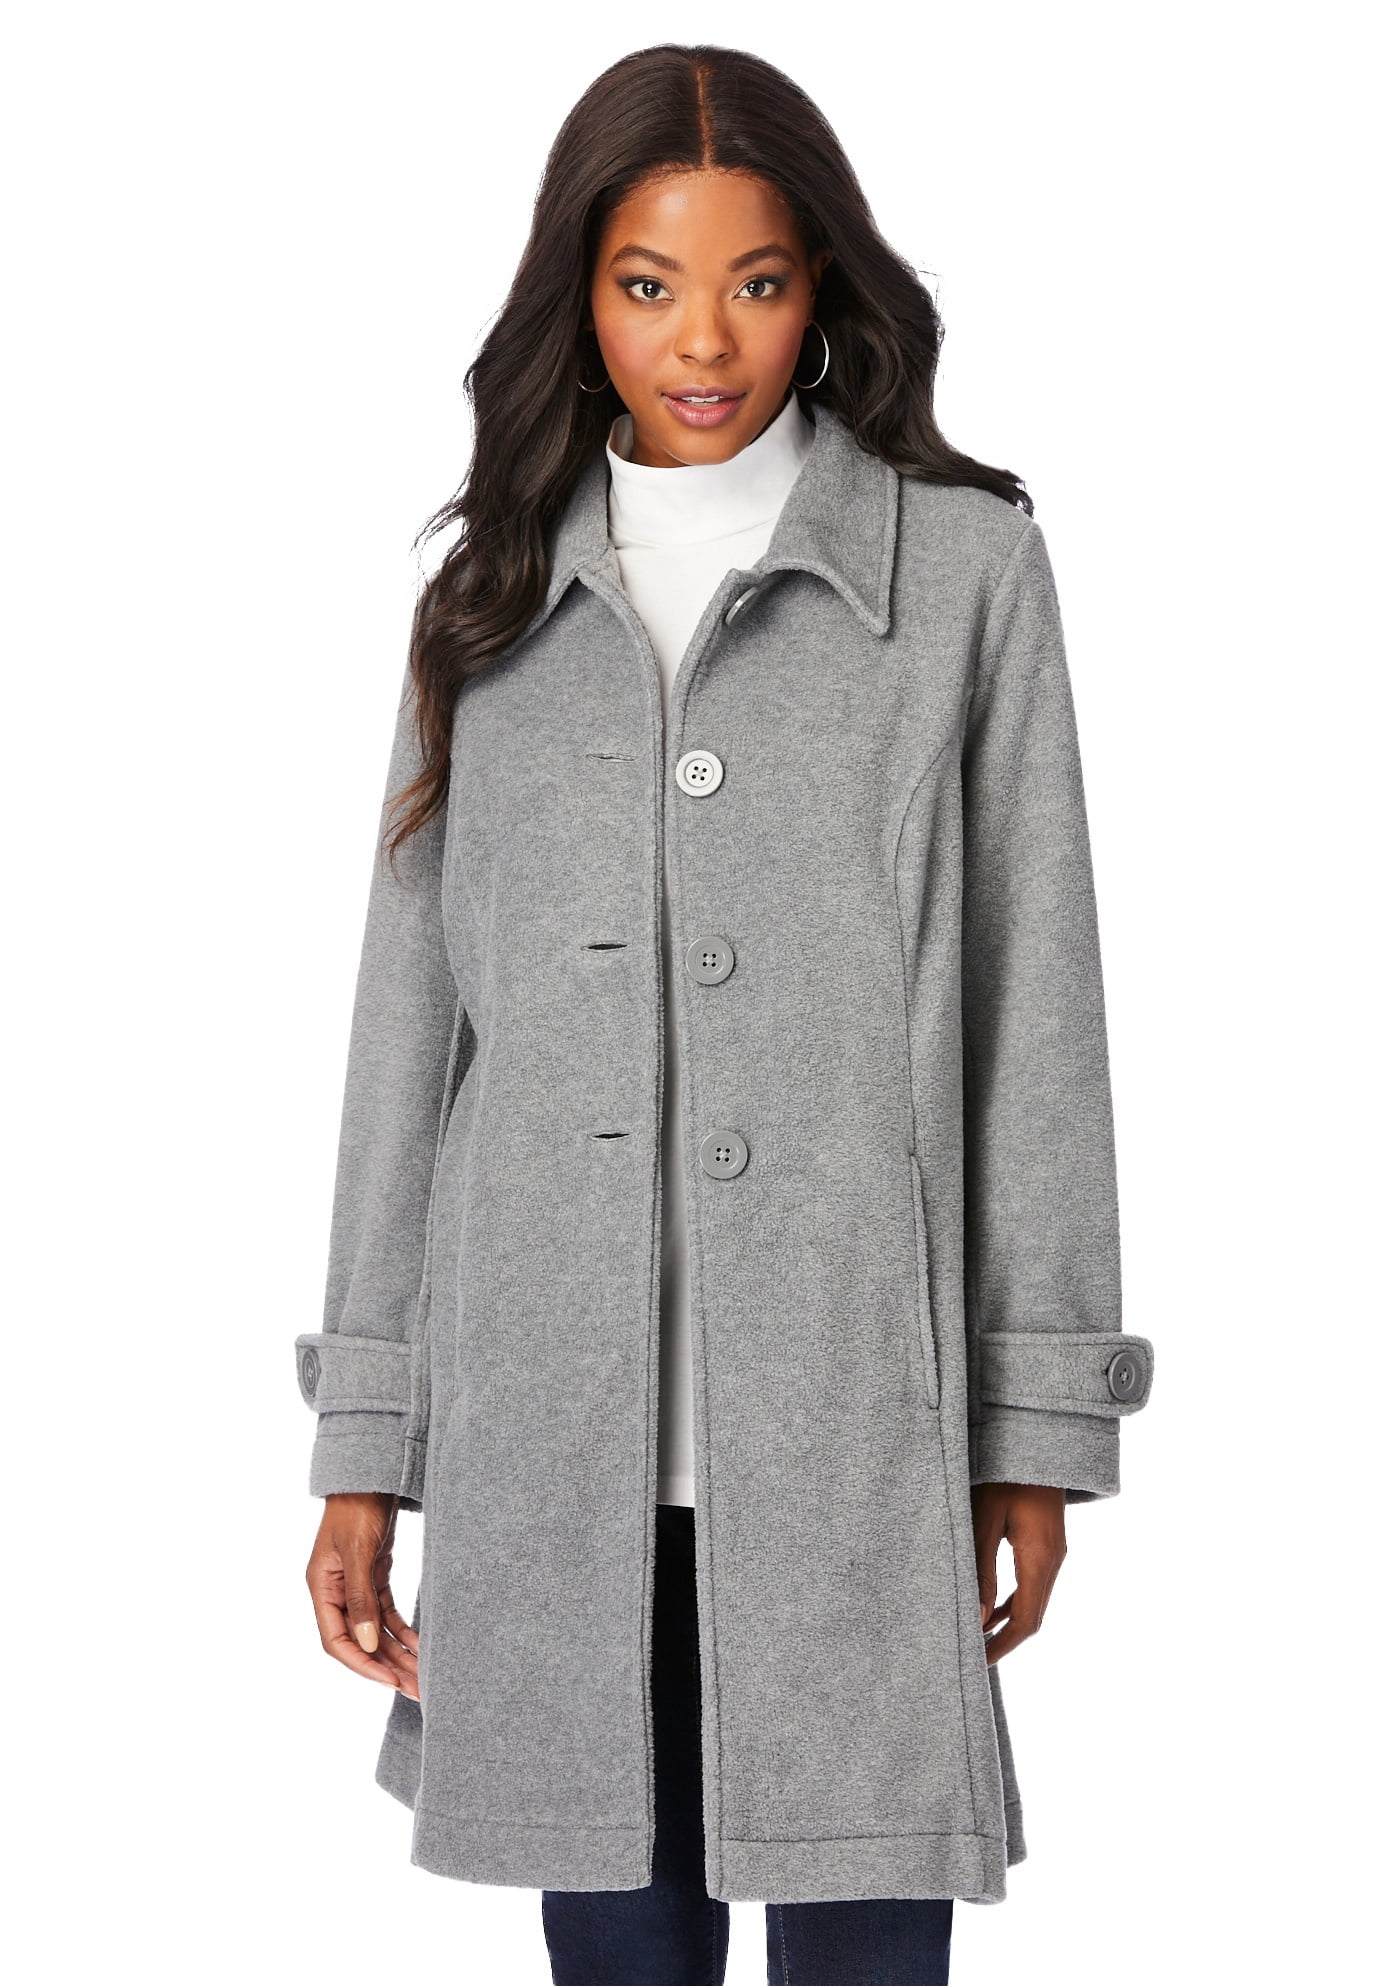 Roaman's Women's Plus Size Plush Fleece Jacket Soft Coat - Walmart.com